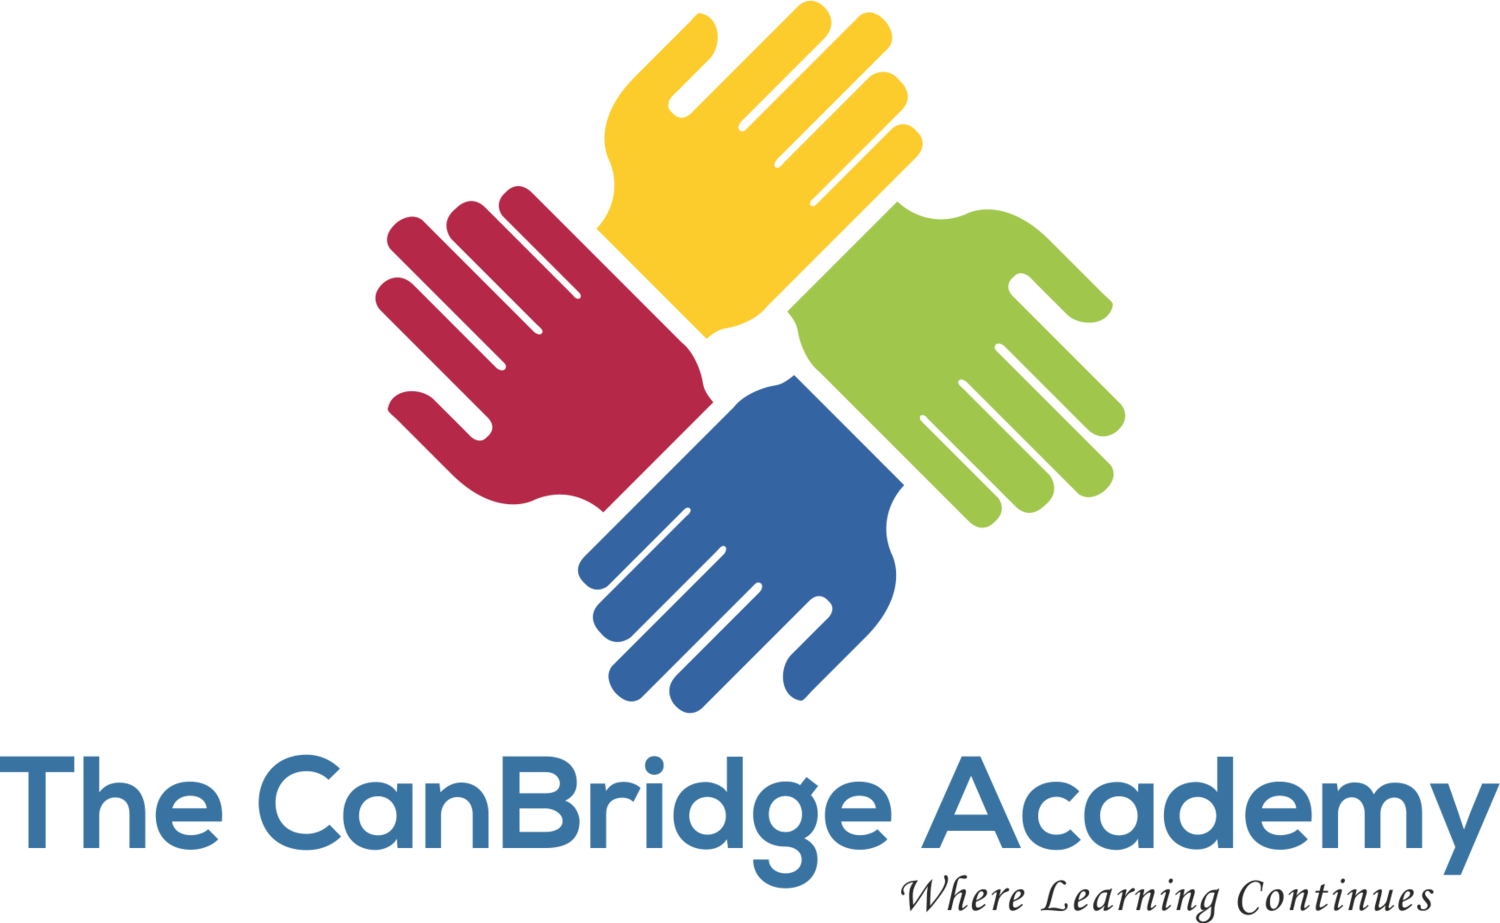 The CanBridge Academy